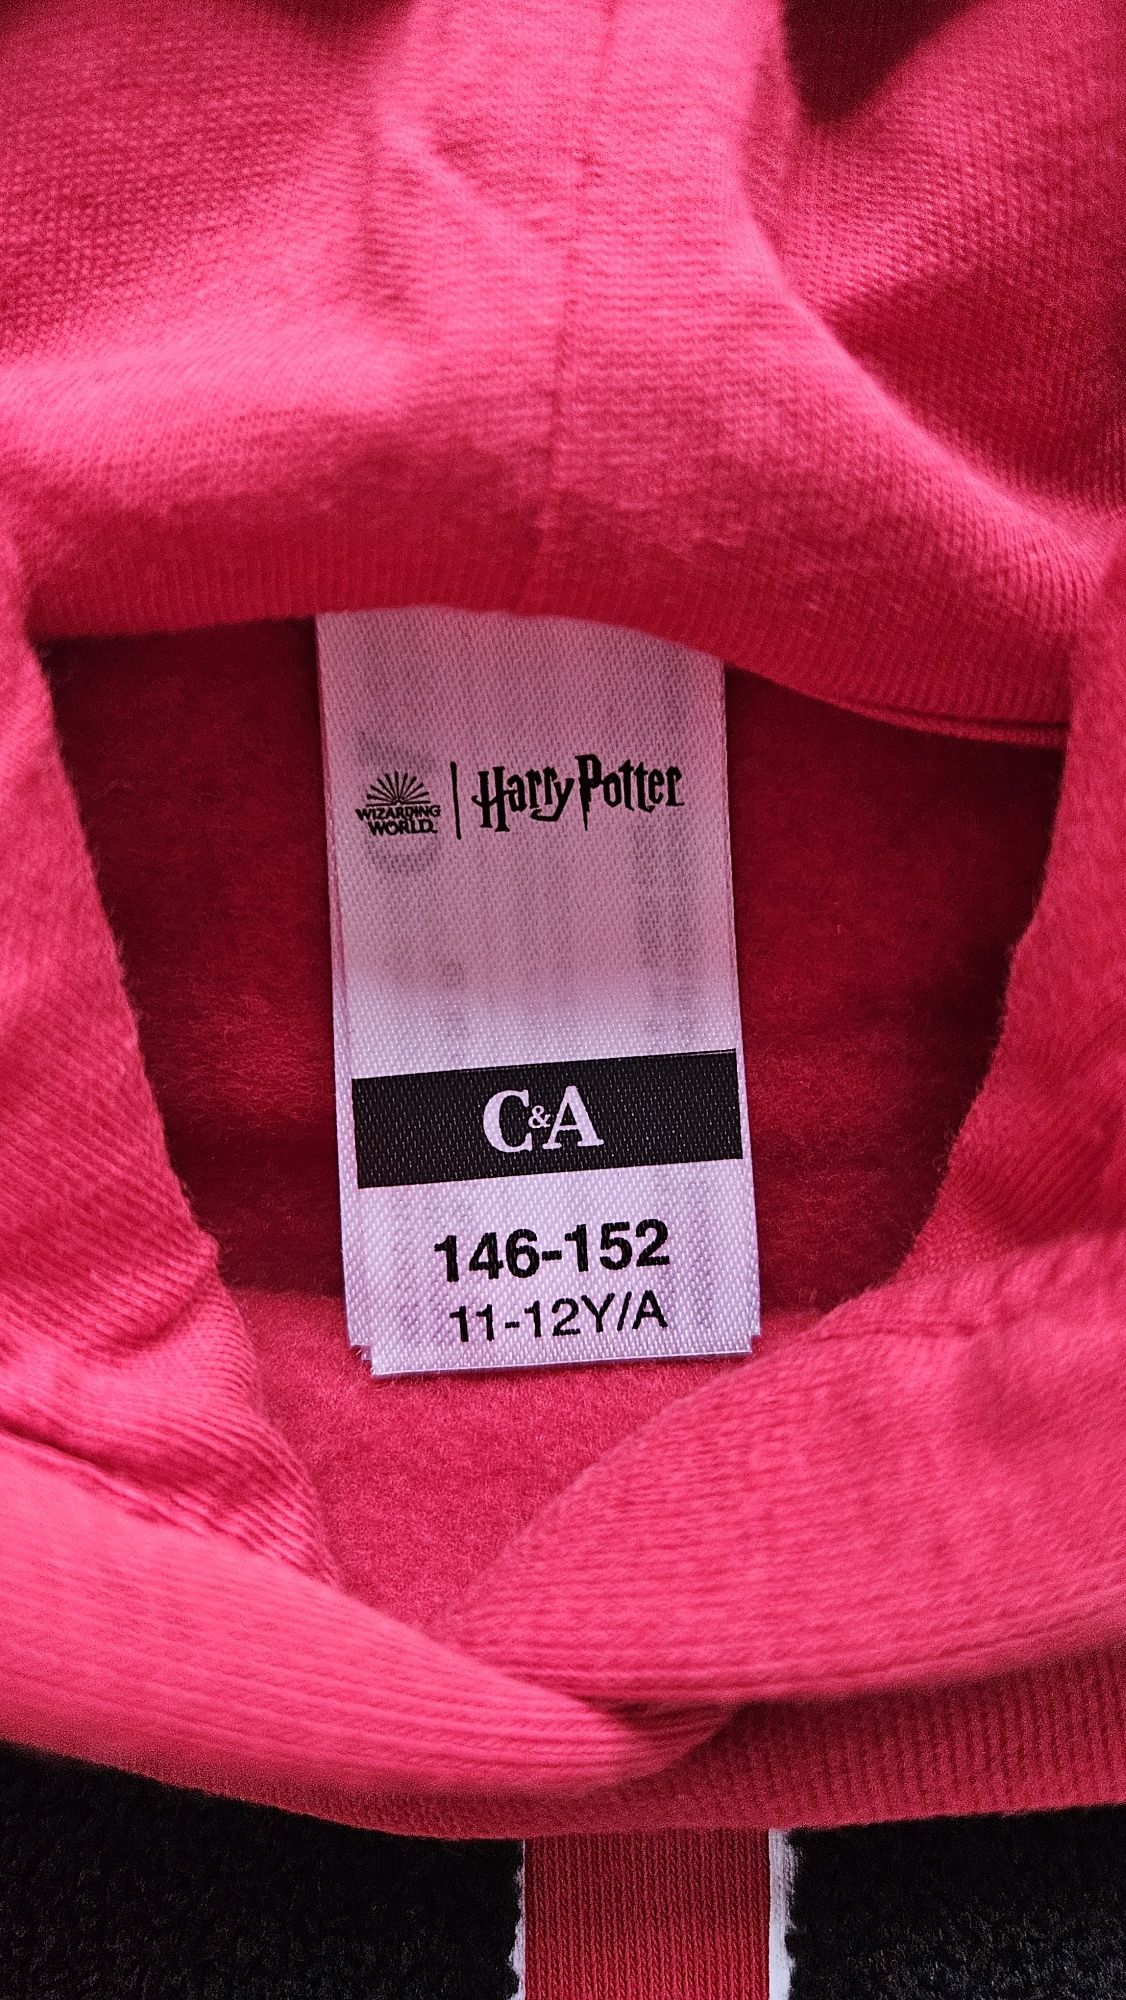 Nowa! C&A Bluza Harry Potter r. 146-152